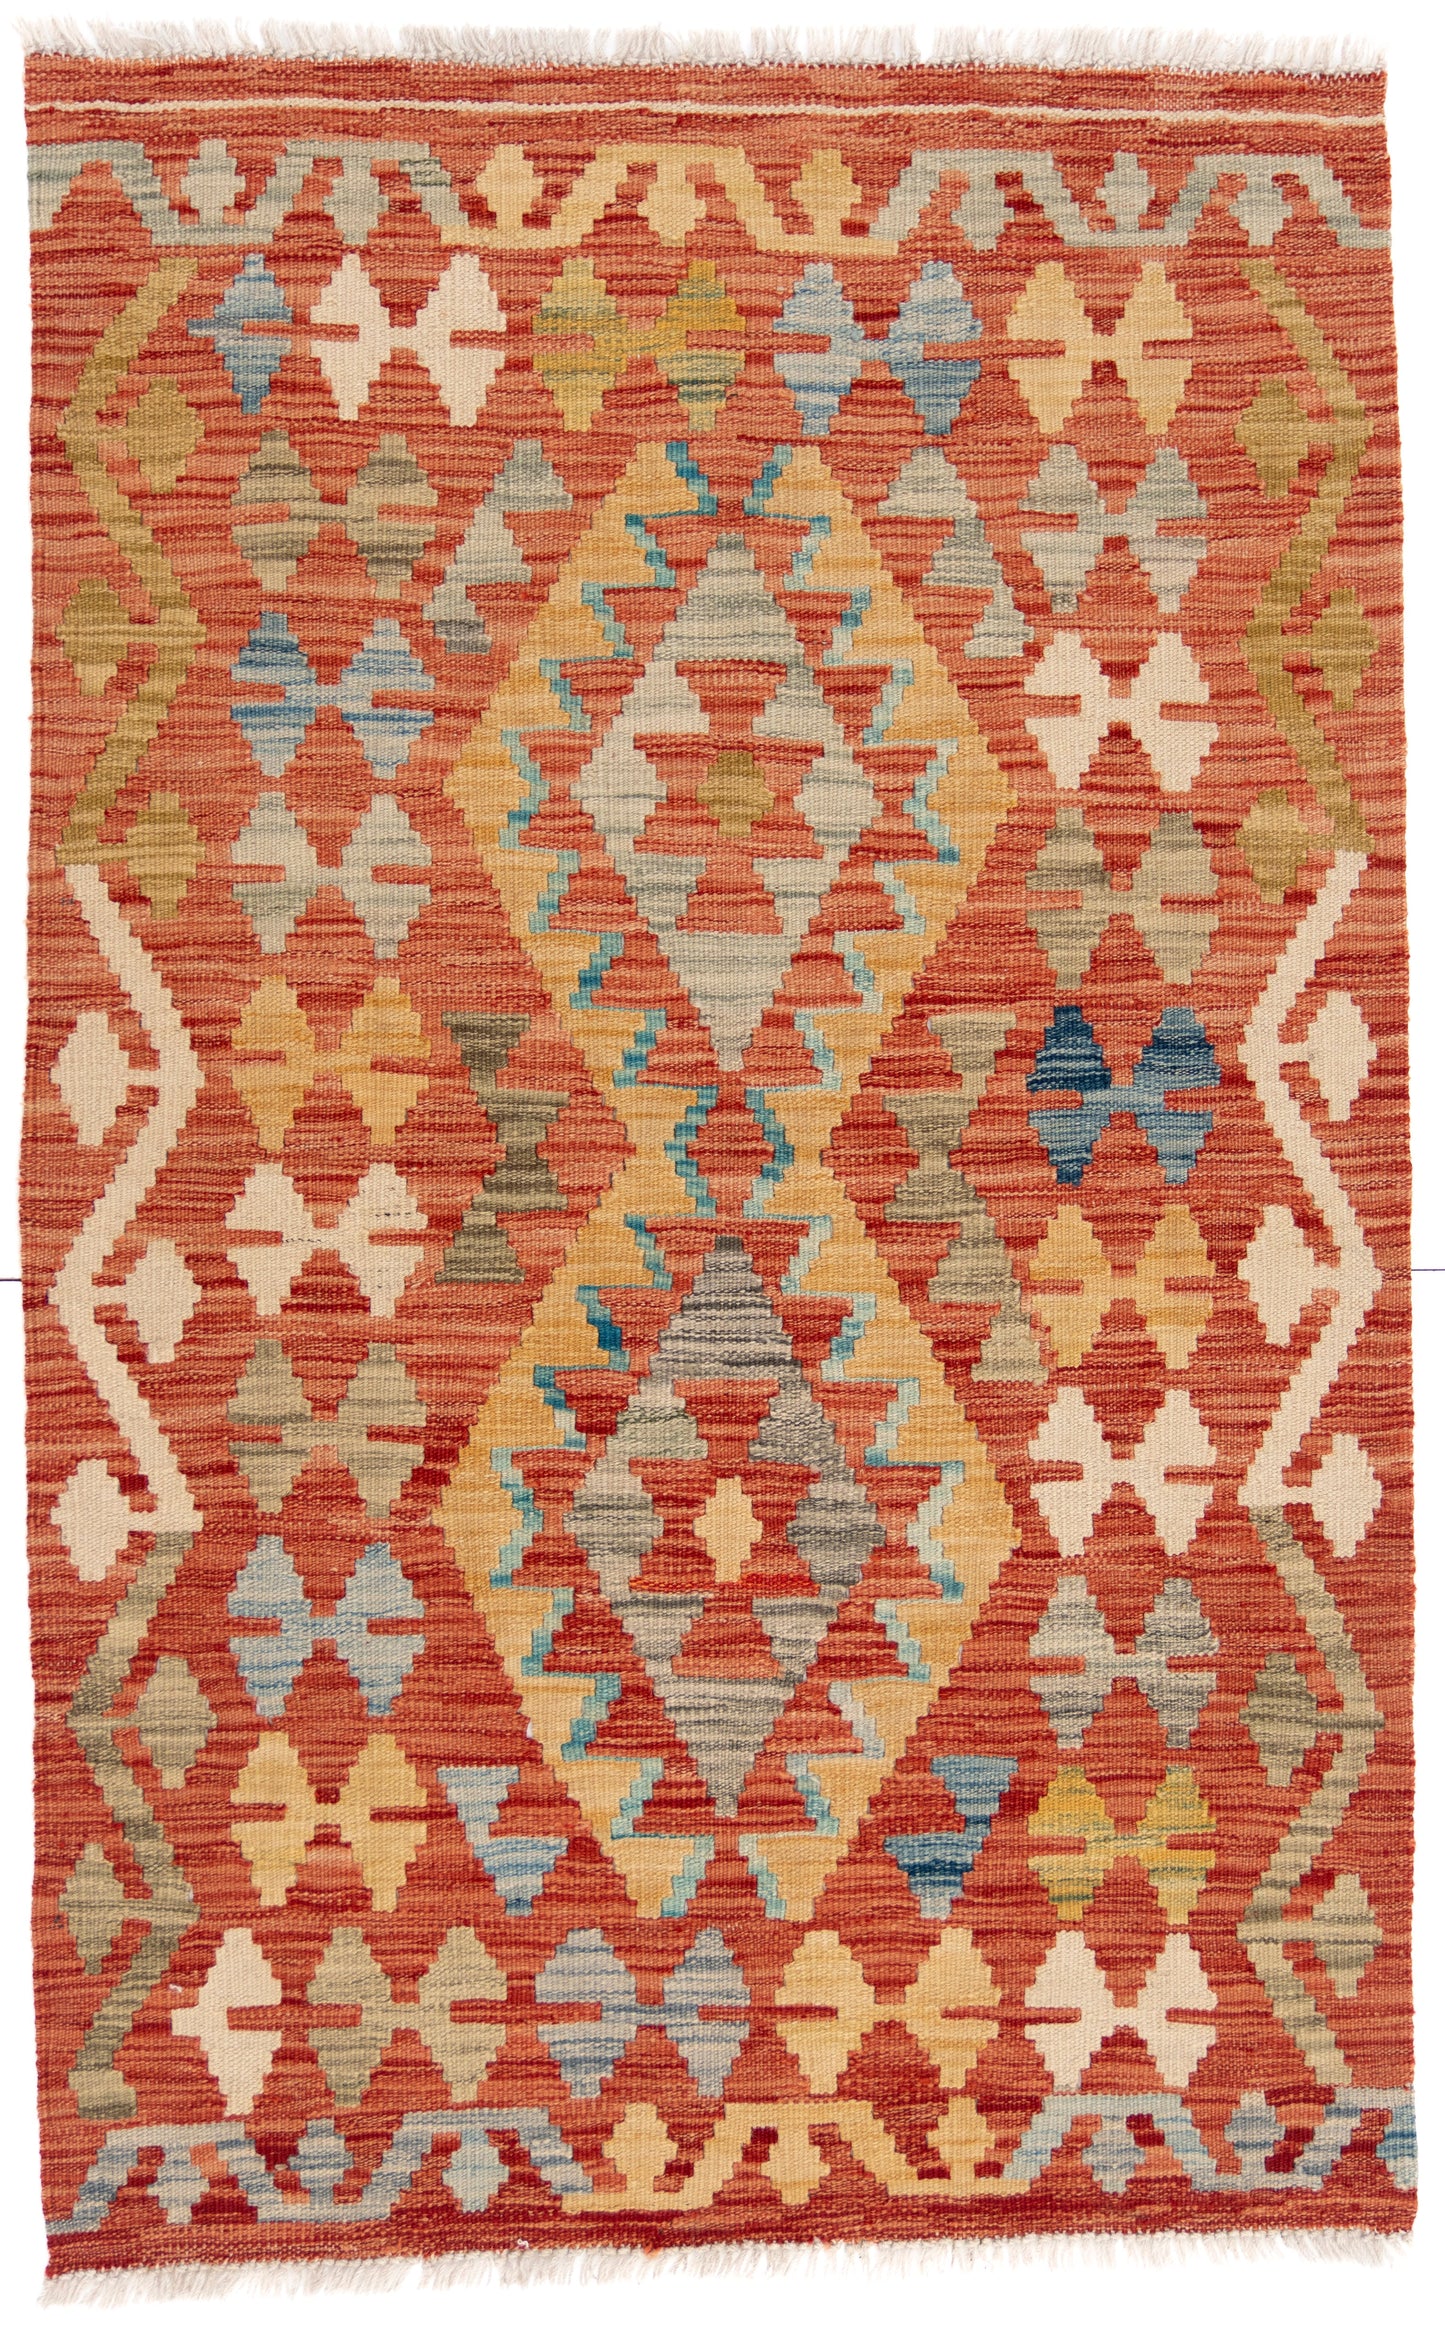 Orange Kilim Carpet with Bright Geometric Shapes